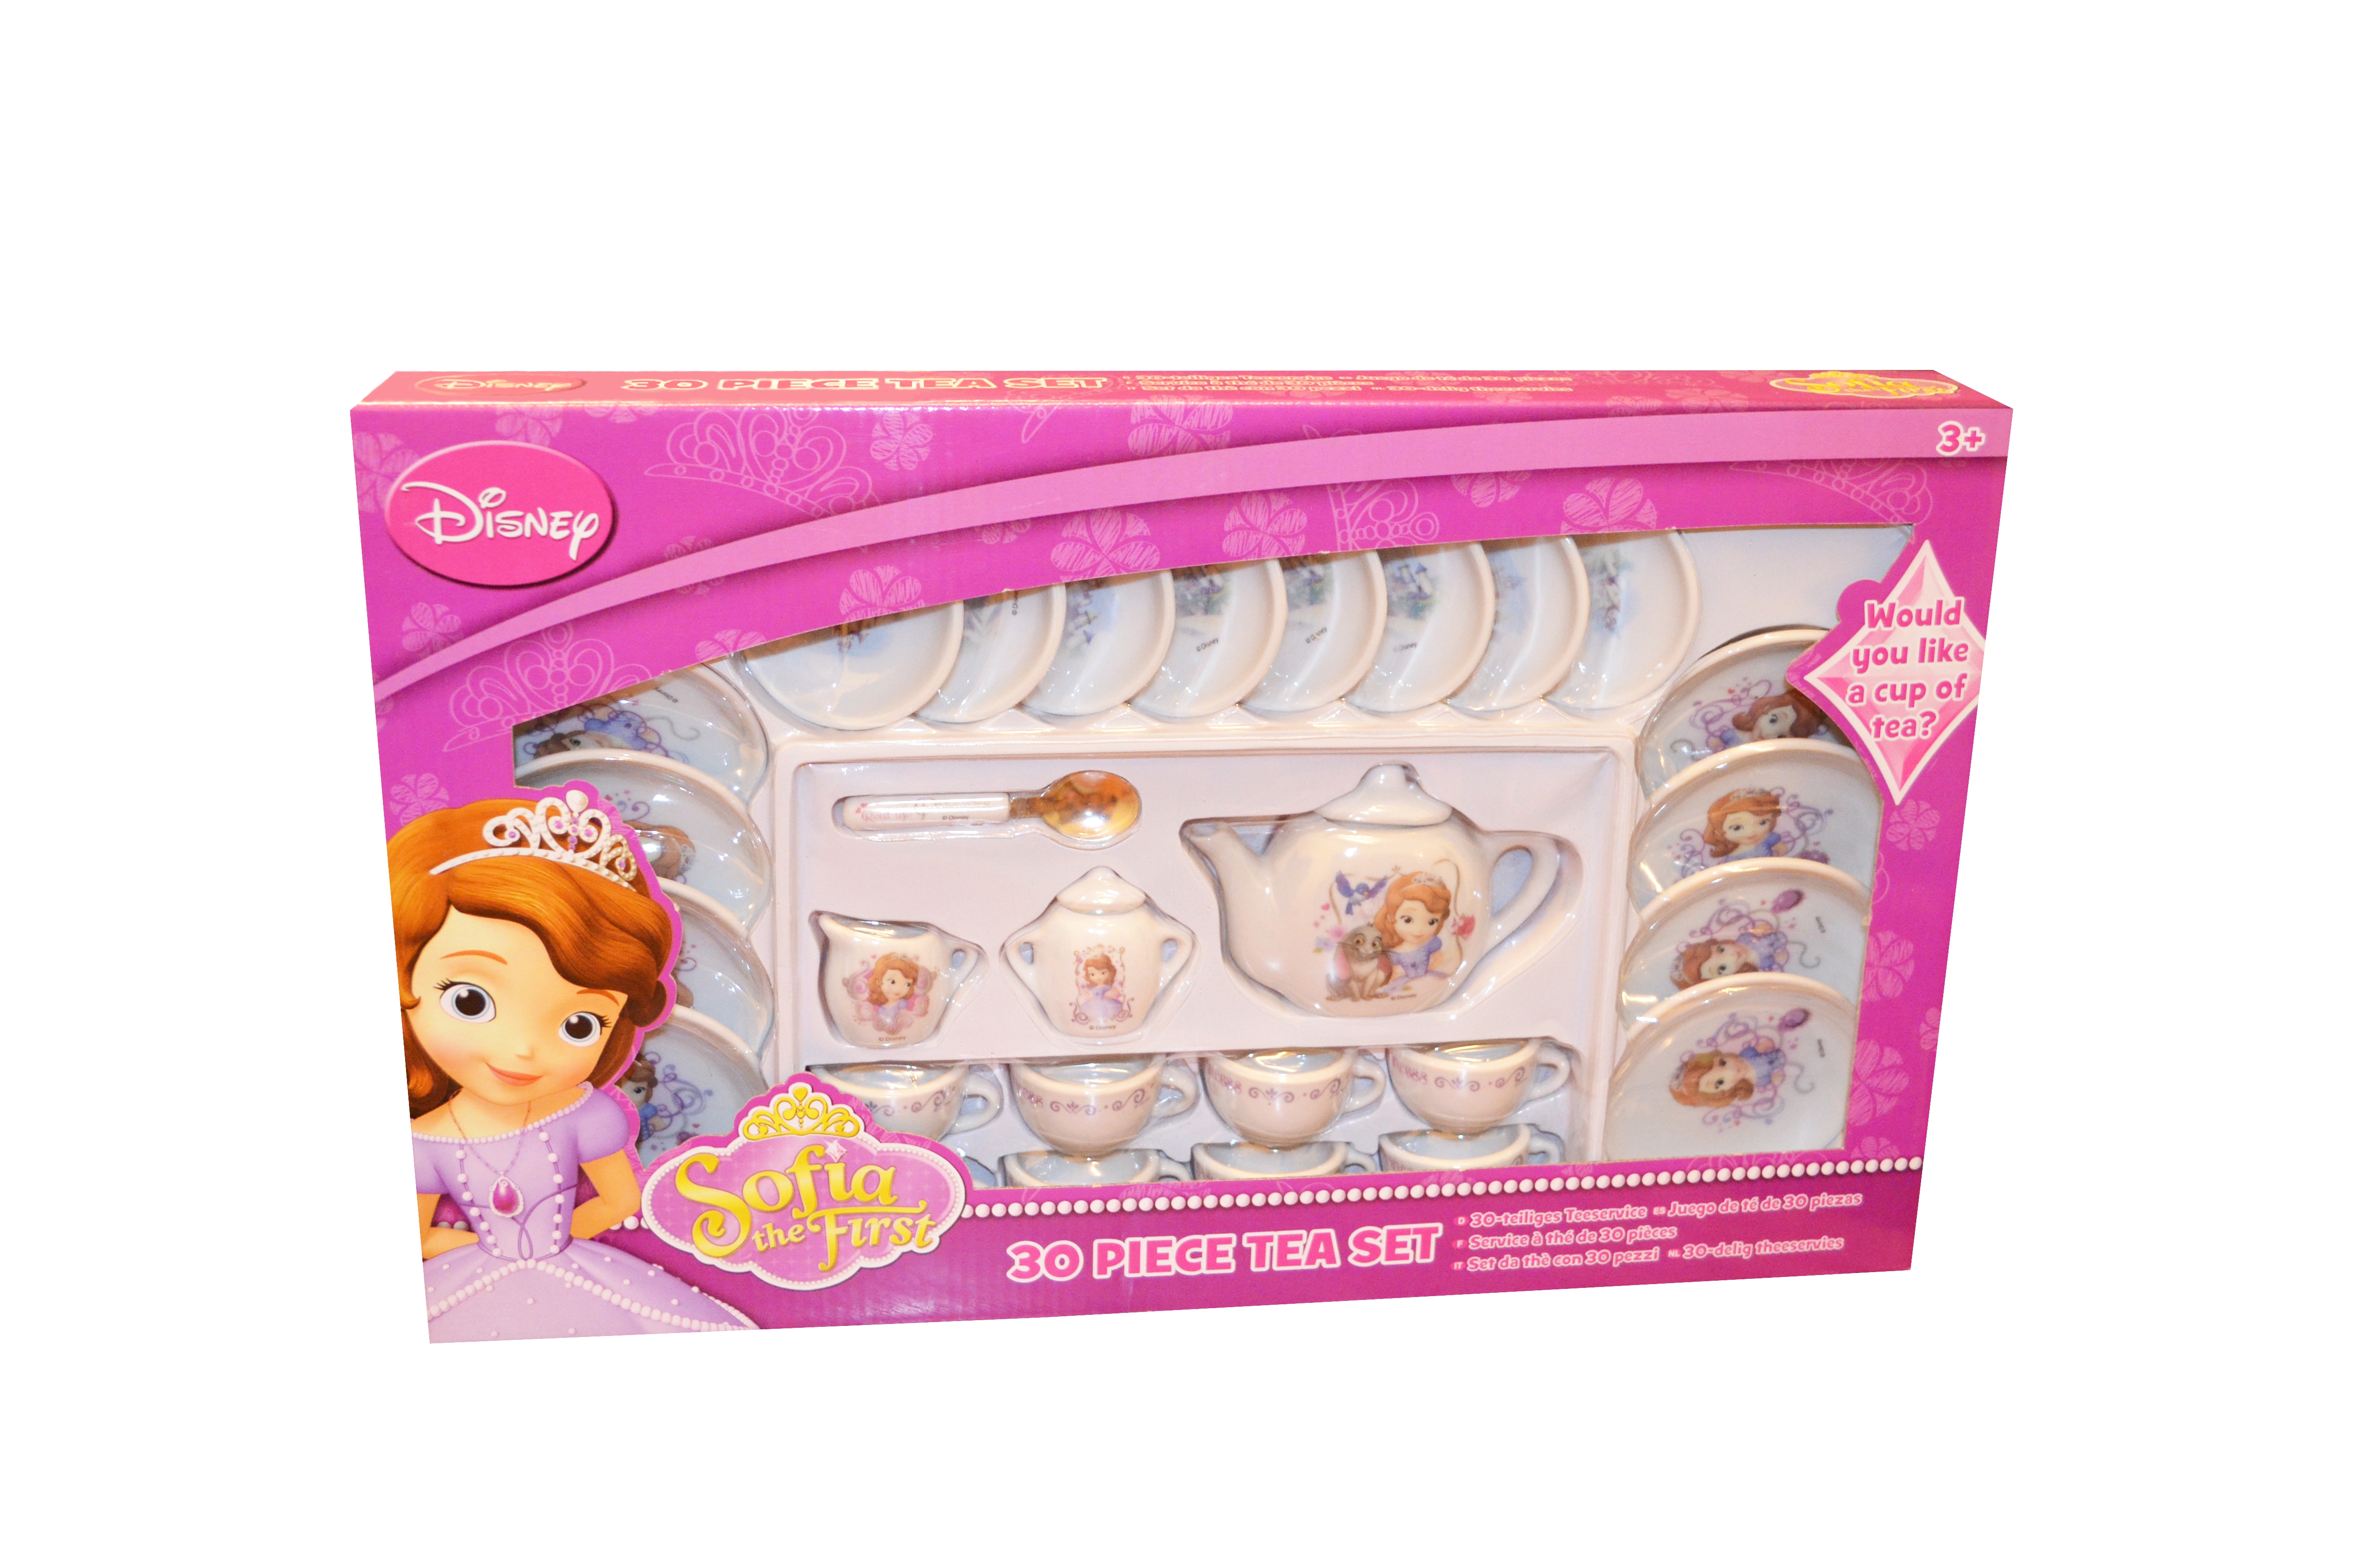 Disney Sofia The First 30 Piece 'Tea Set' Play Set Toy